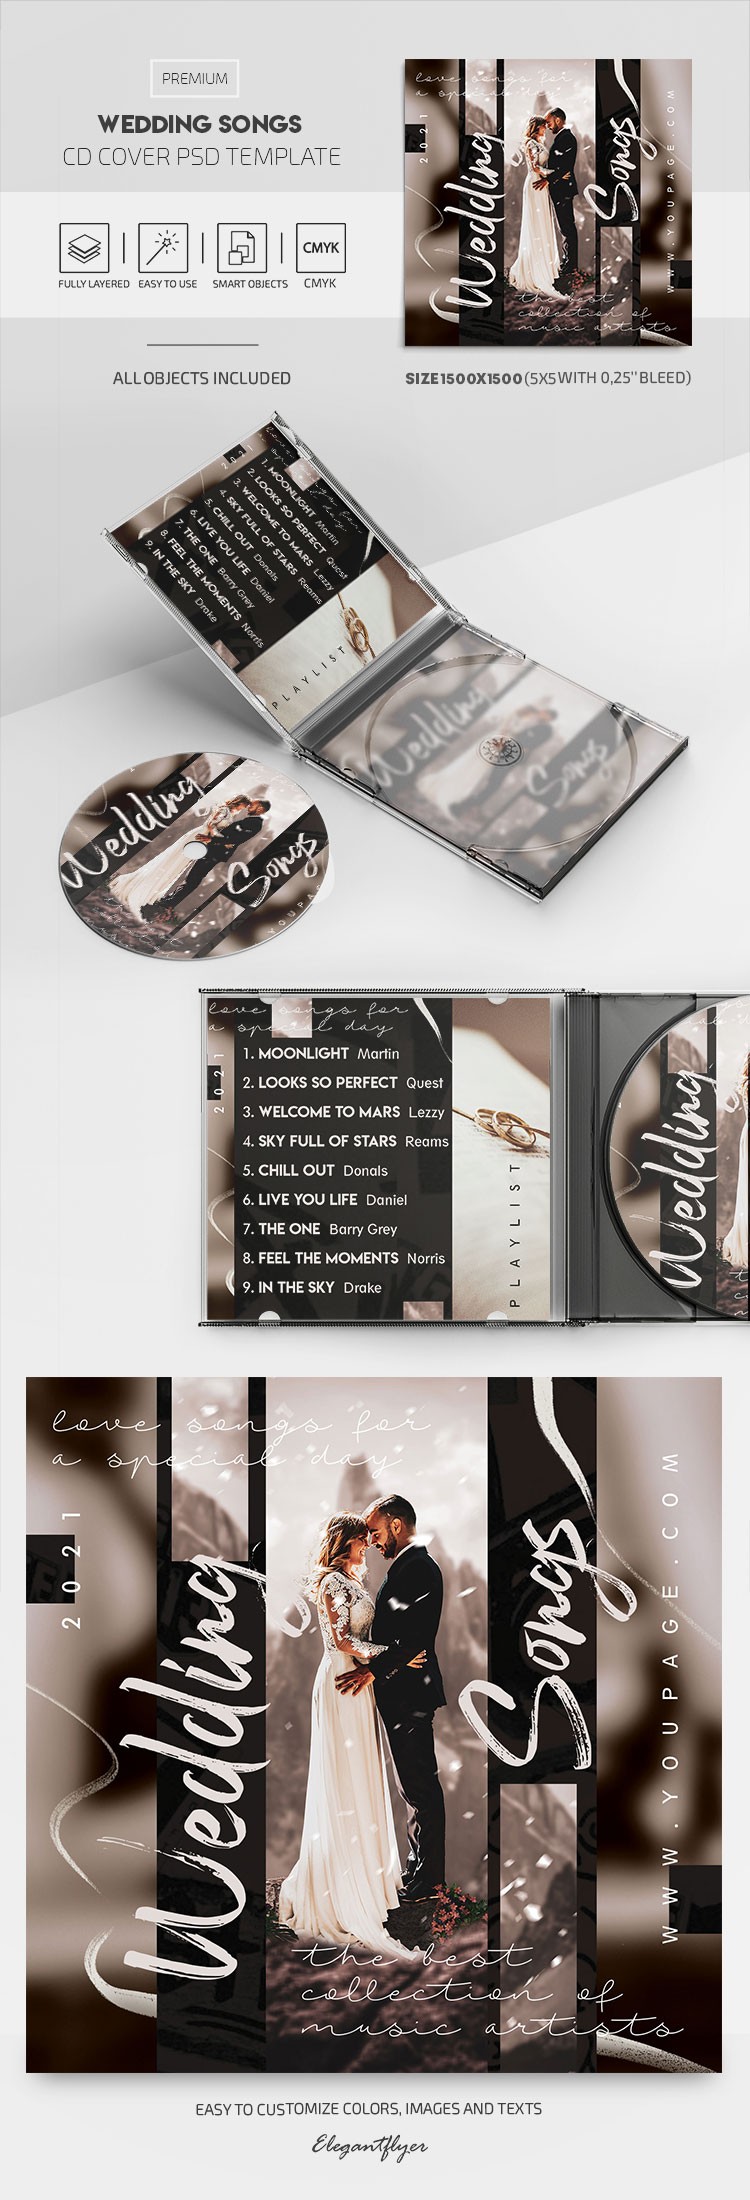 Pochette de CD Chansons de mariage by ElegantFlyer